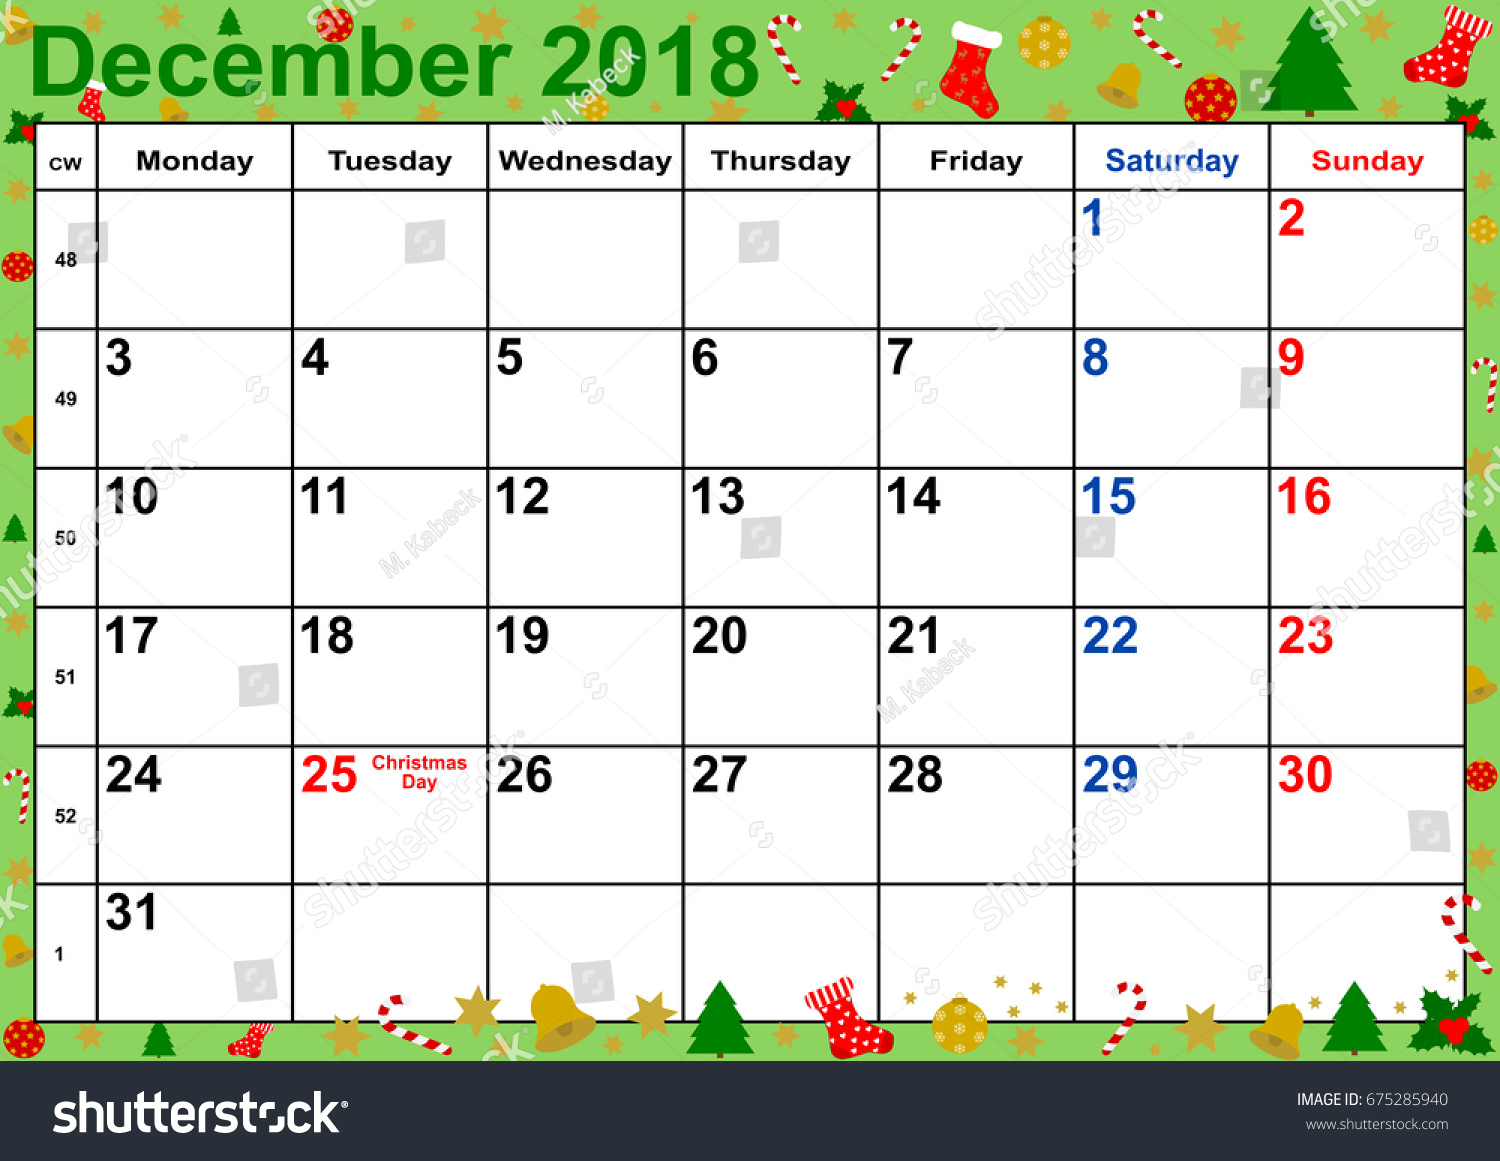 December 2018 Holidays Calendar